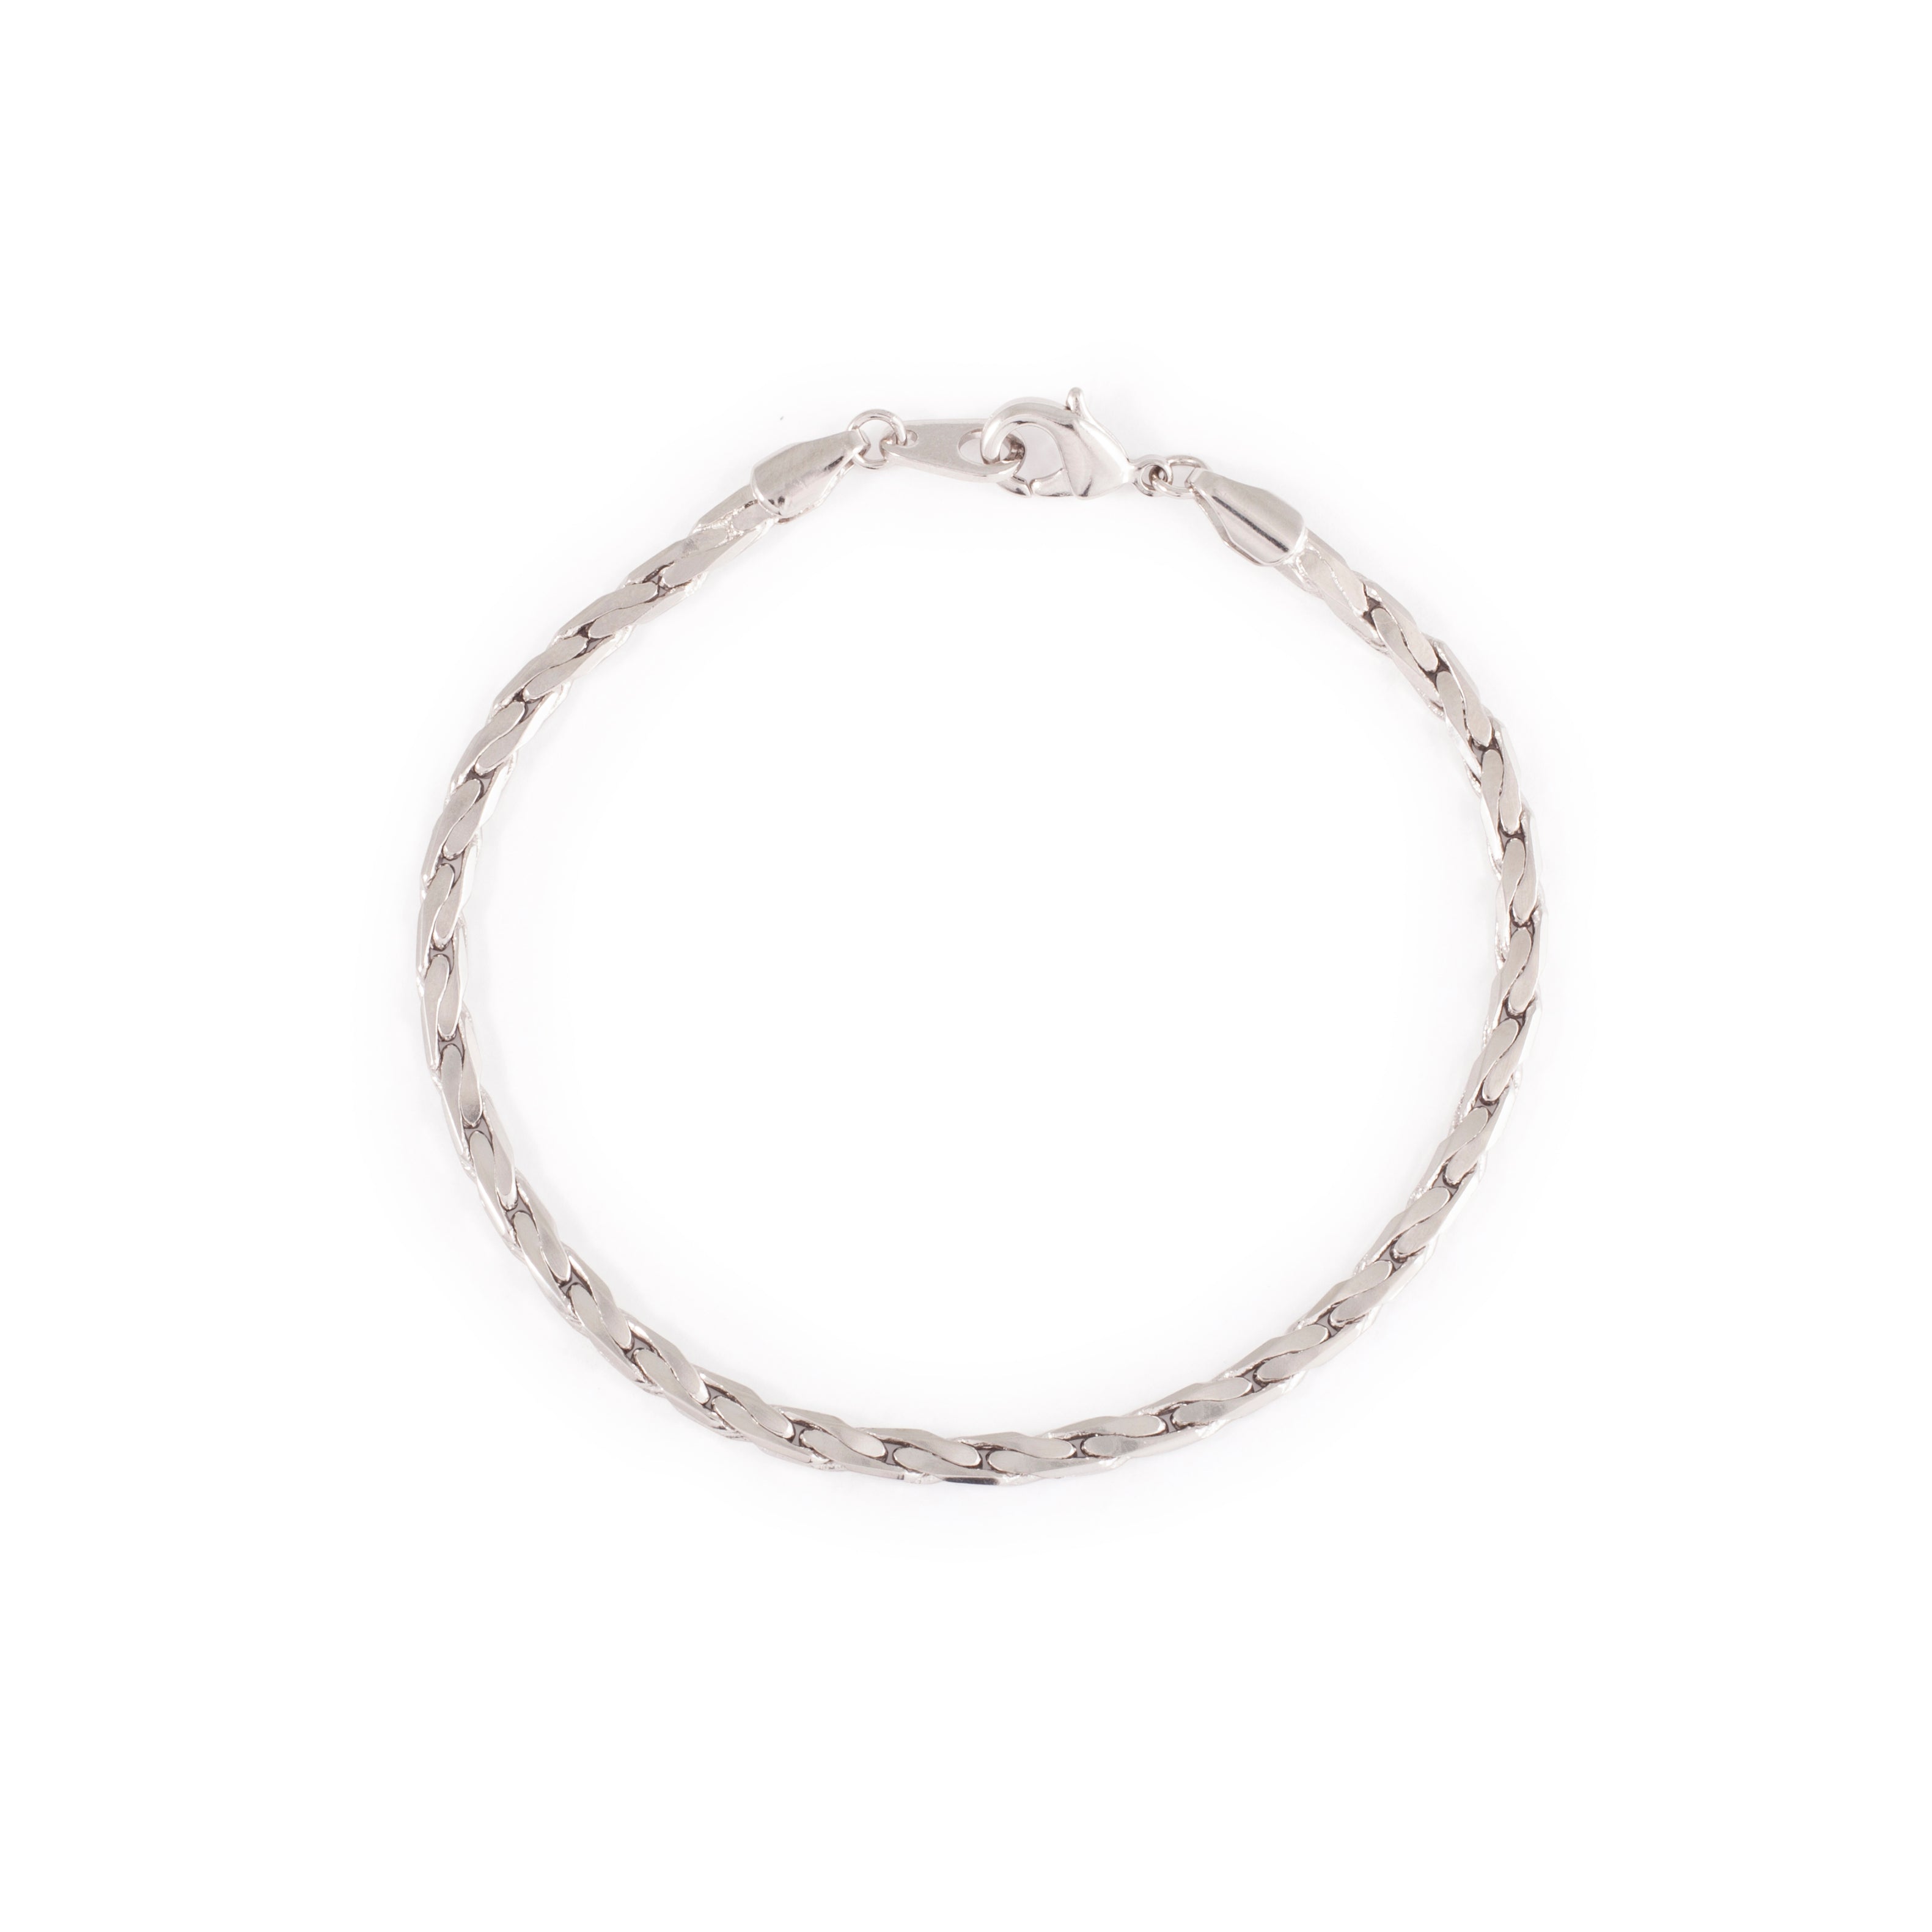 Silver tight link chain bracelet